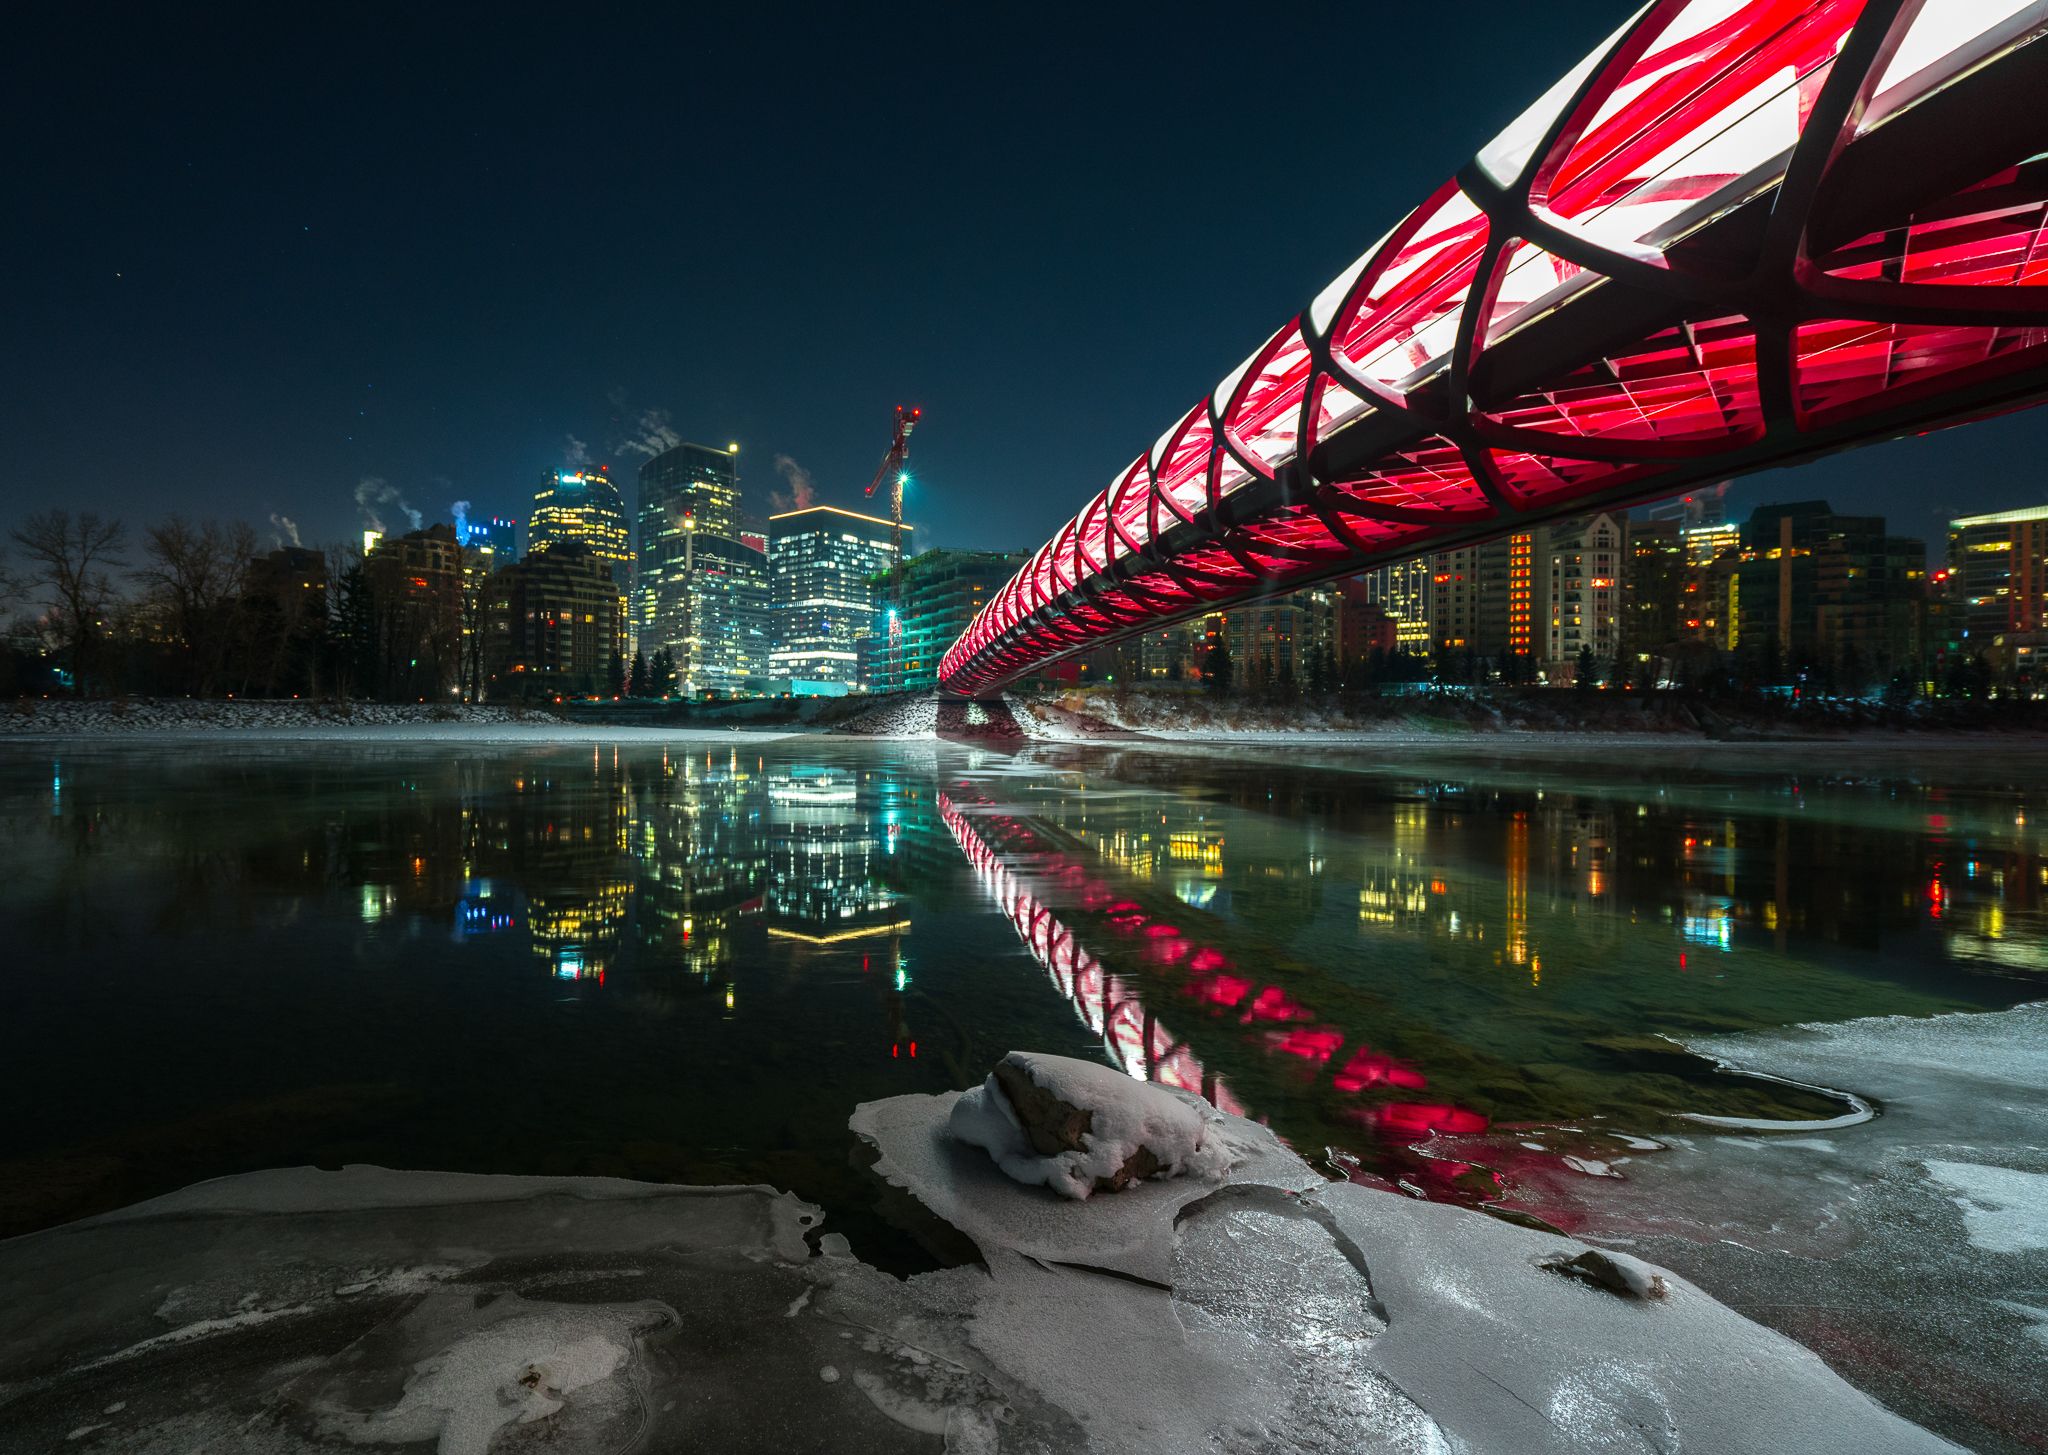 Cold night at the Calgary Peace Bridge